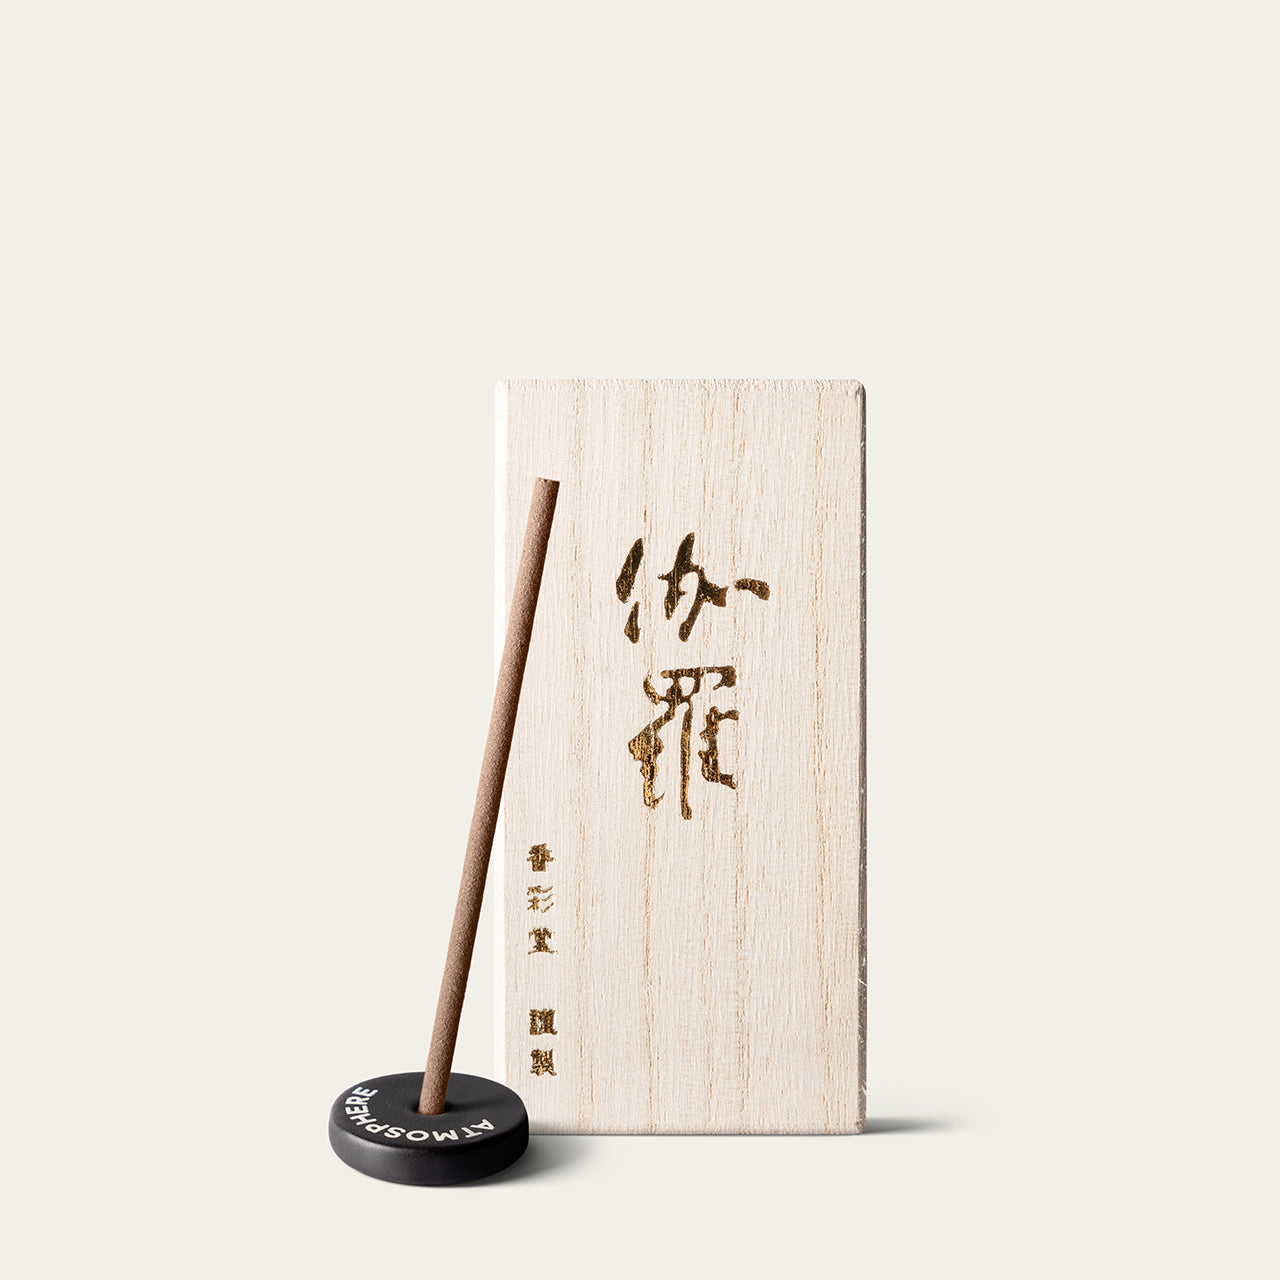 Kousaido Premium Kyara Japanese incense sticks (55 sticks) with Atmosphere ceramic incense holder